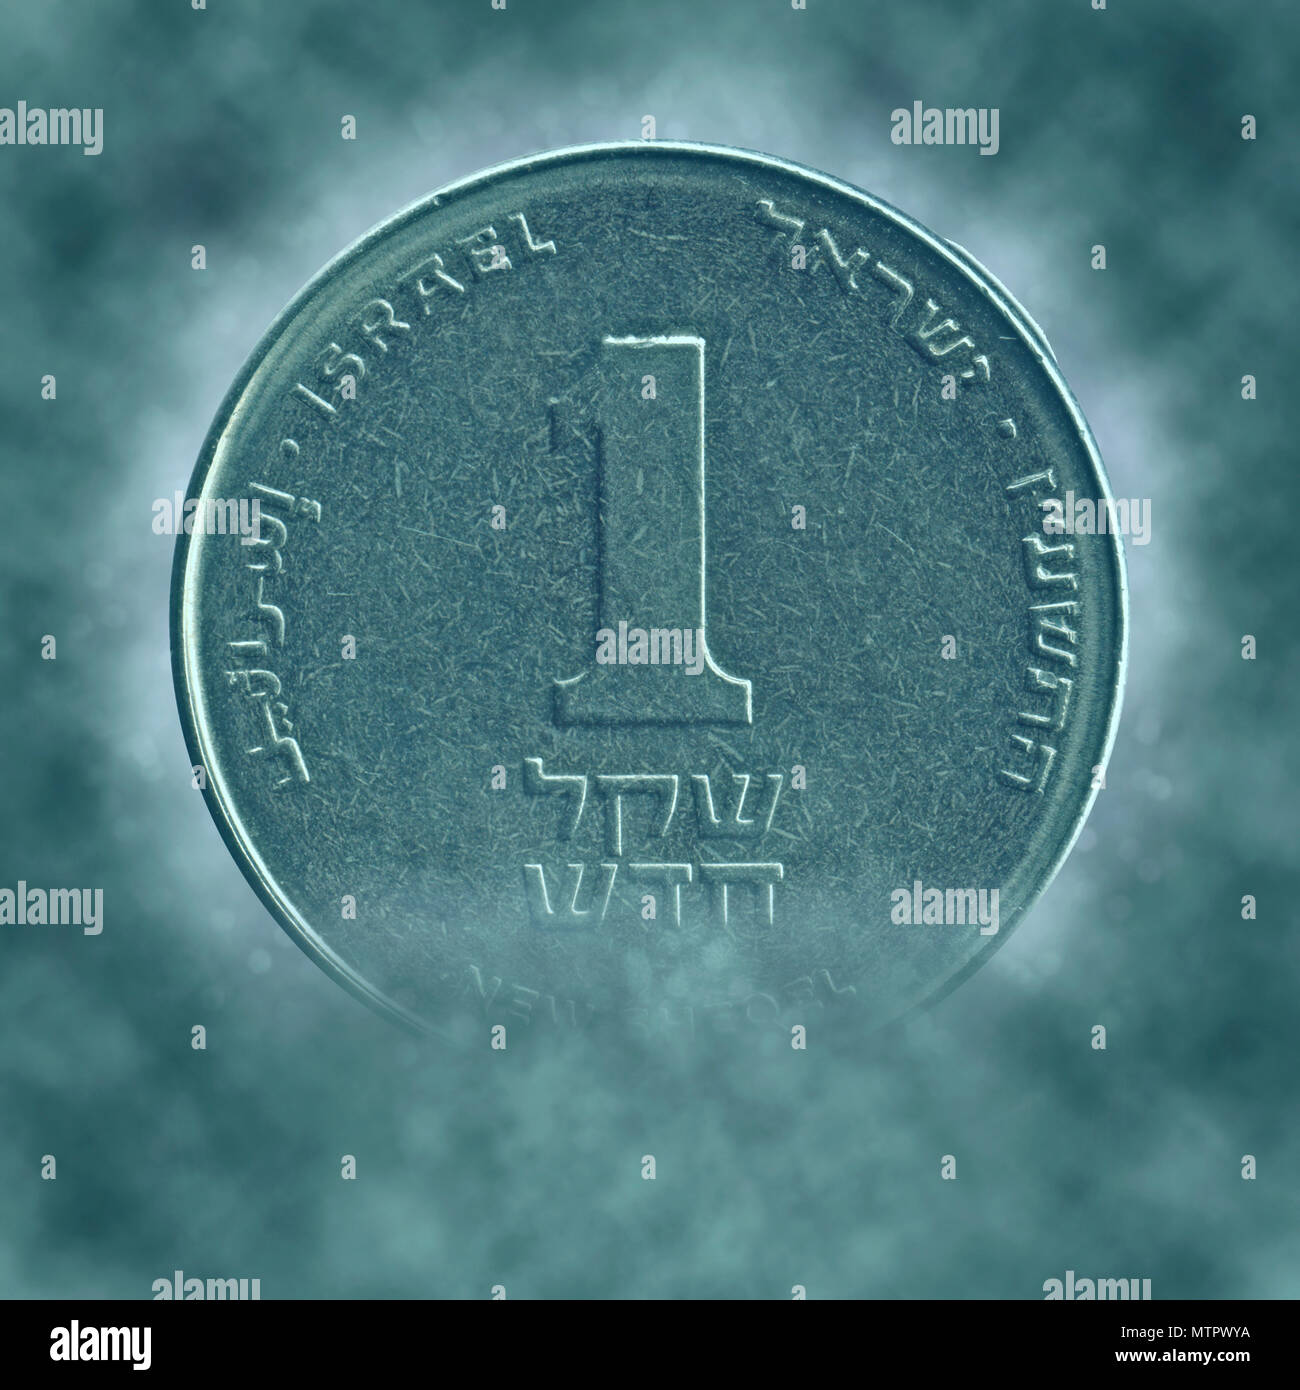 Digitally enhanced image of a One New Israeli Shekel coin (ILS or NIS) Stock Photo